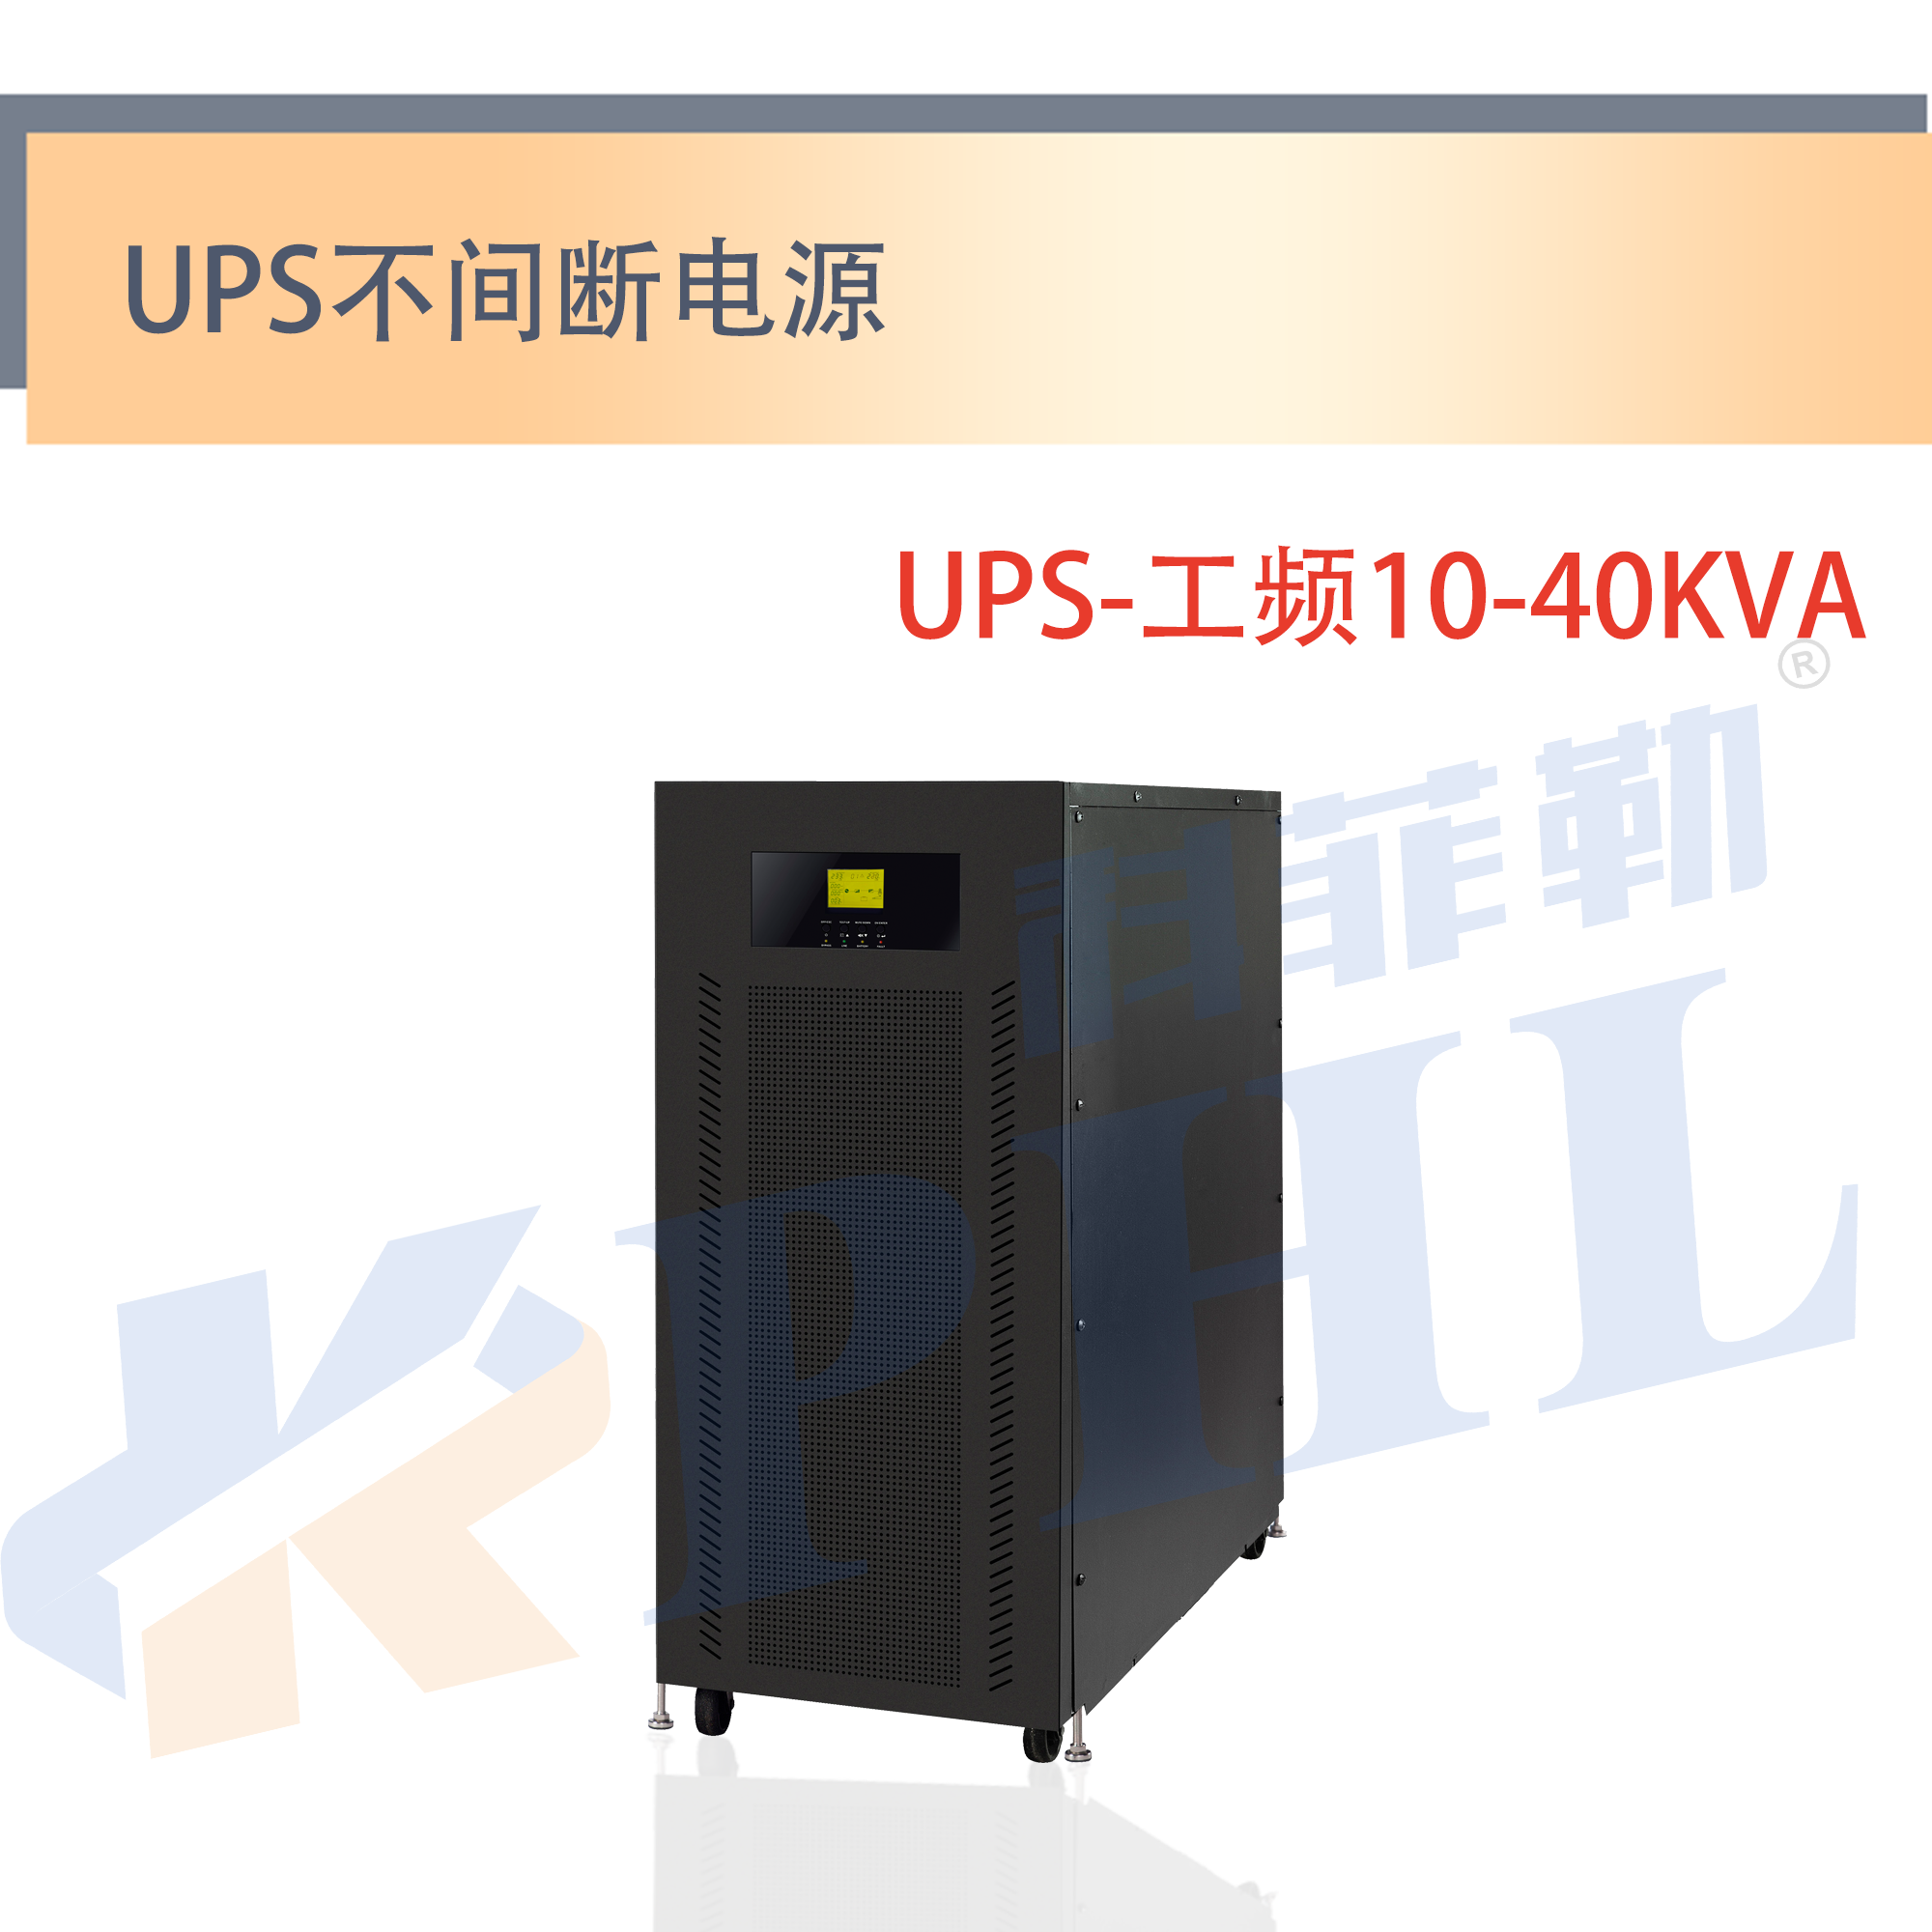 UPS-工频10-40KVA